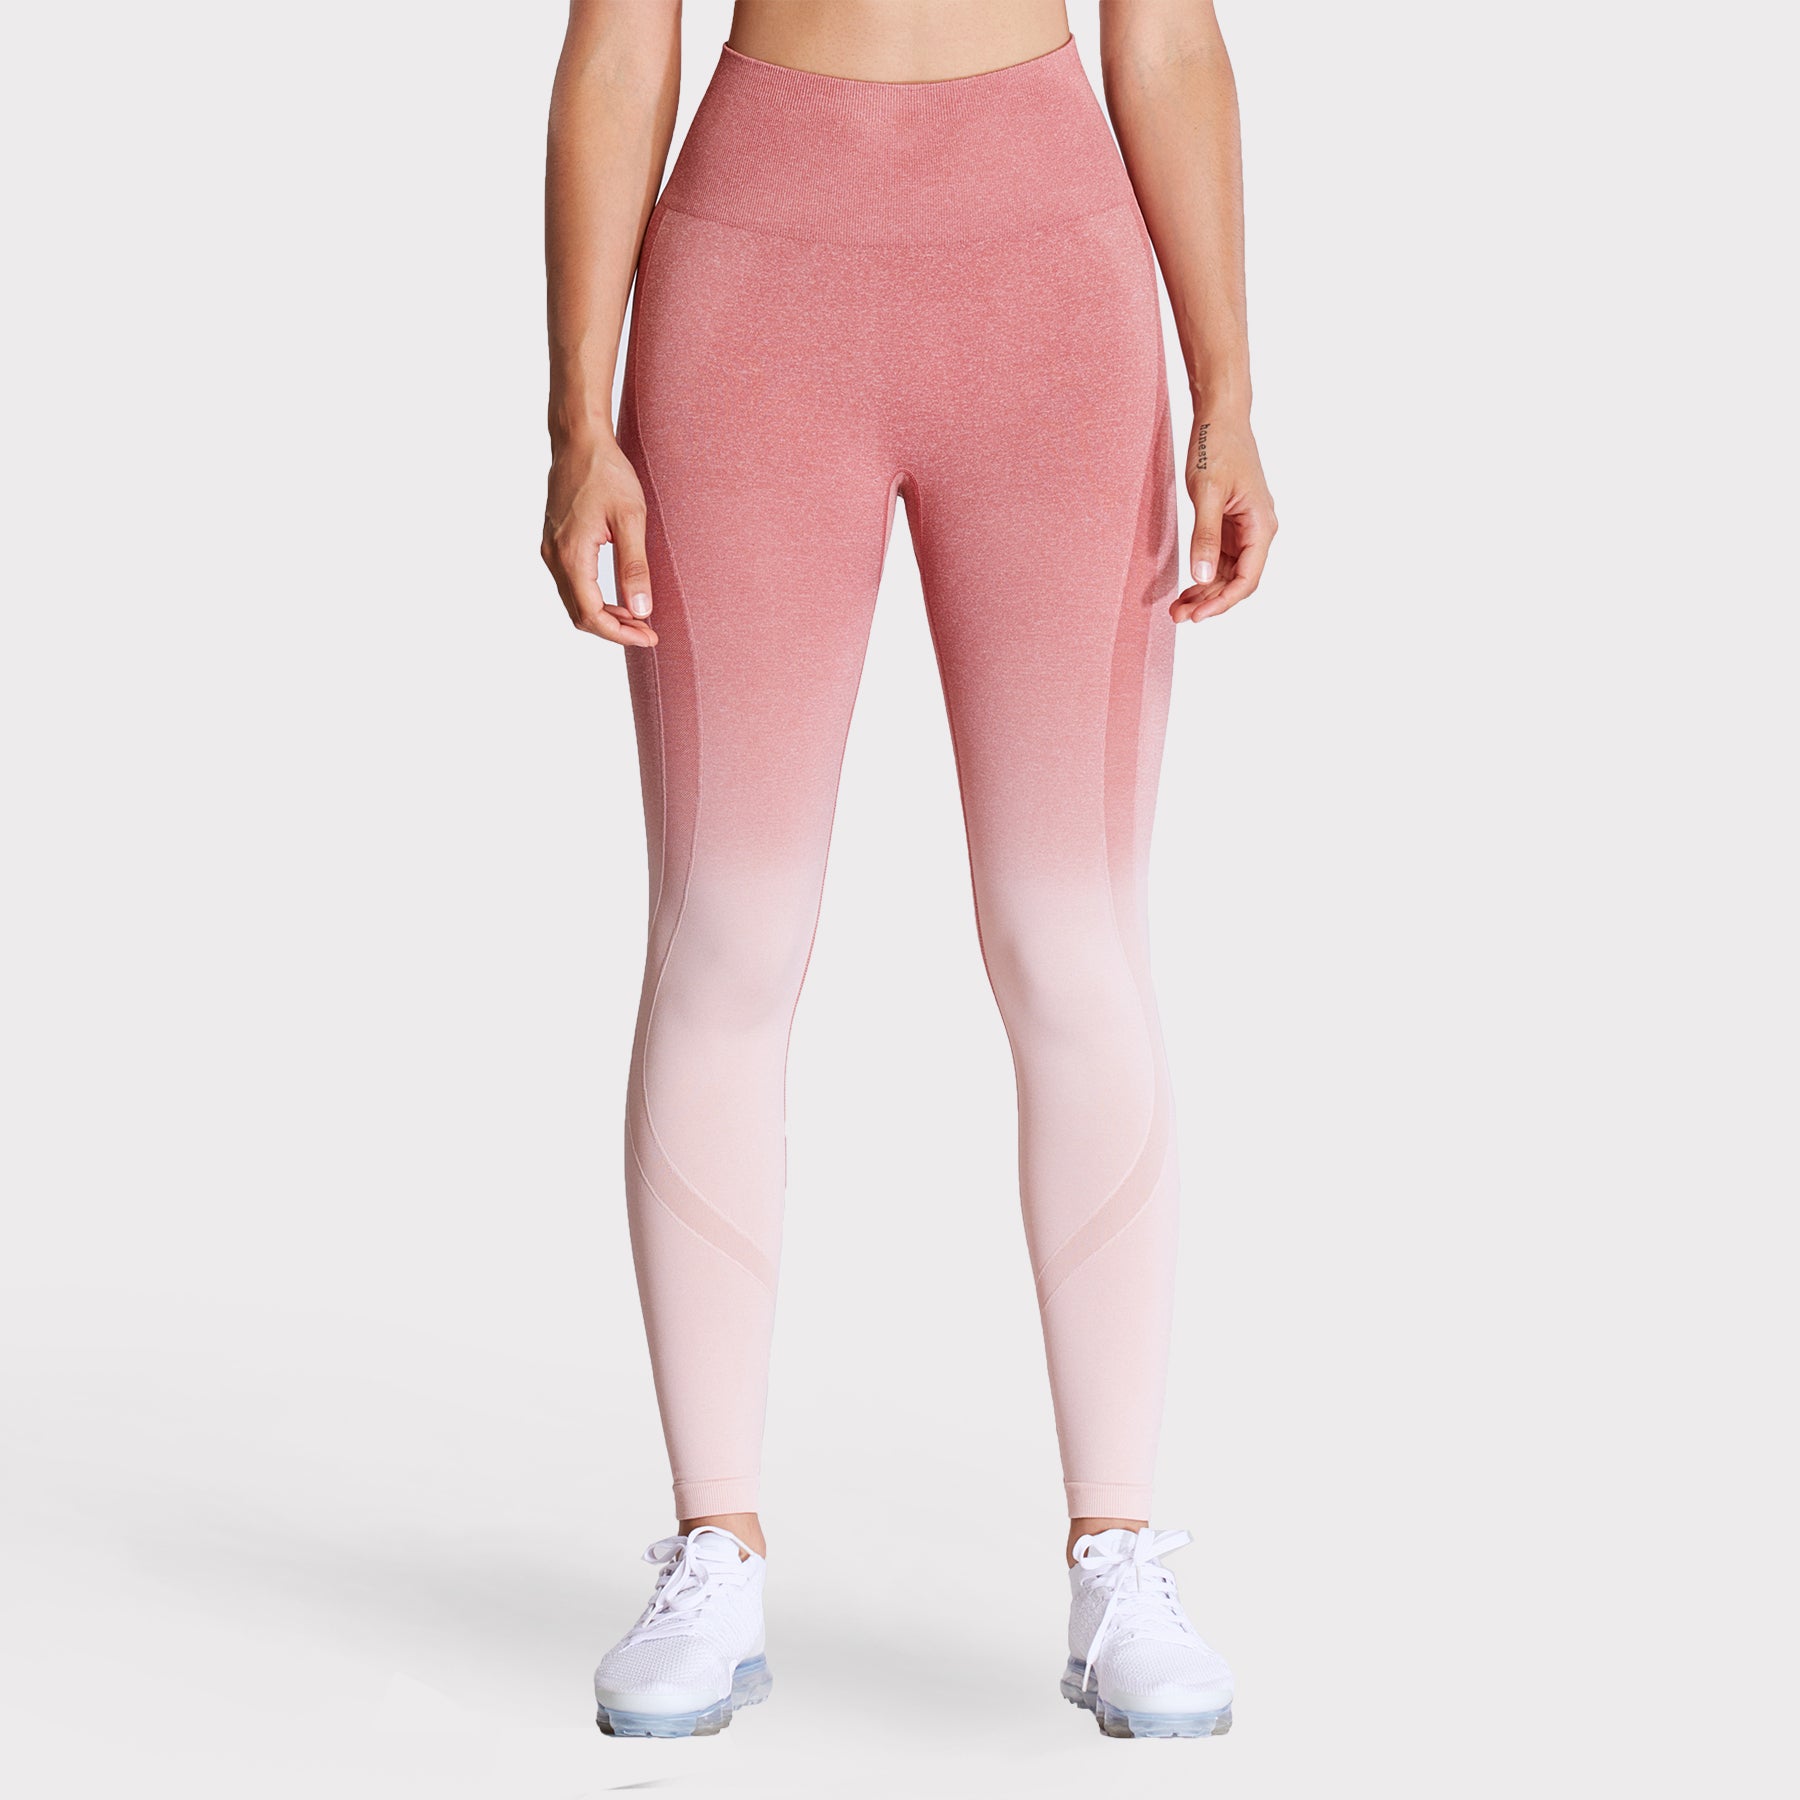 Xersion Multi Color Pink Leggings Size L - 26% off